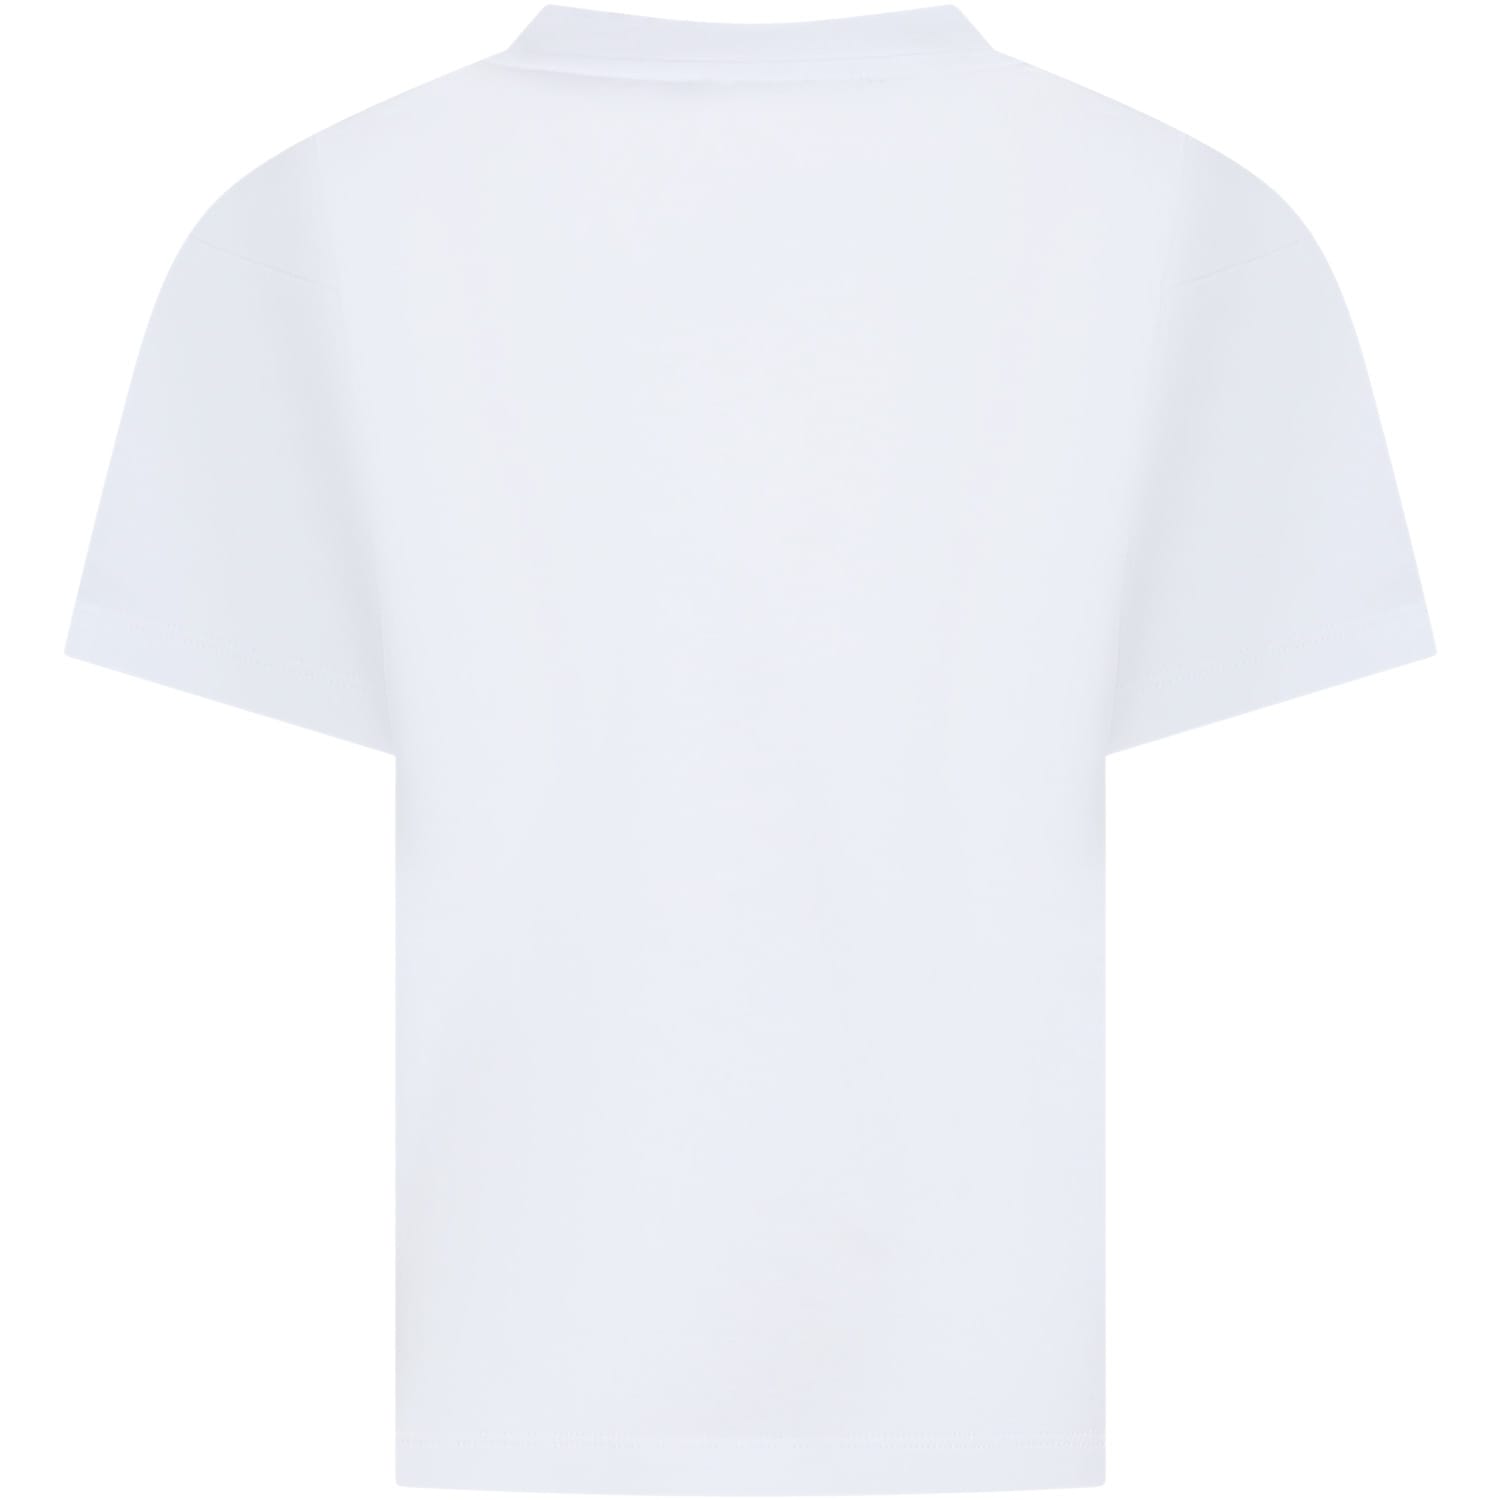 Shop Balmain White T-shirt For Girl With Logo